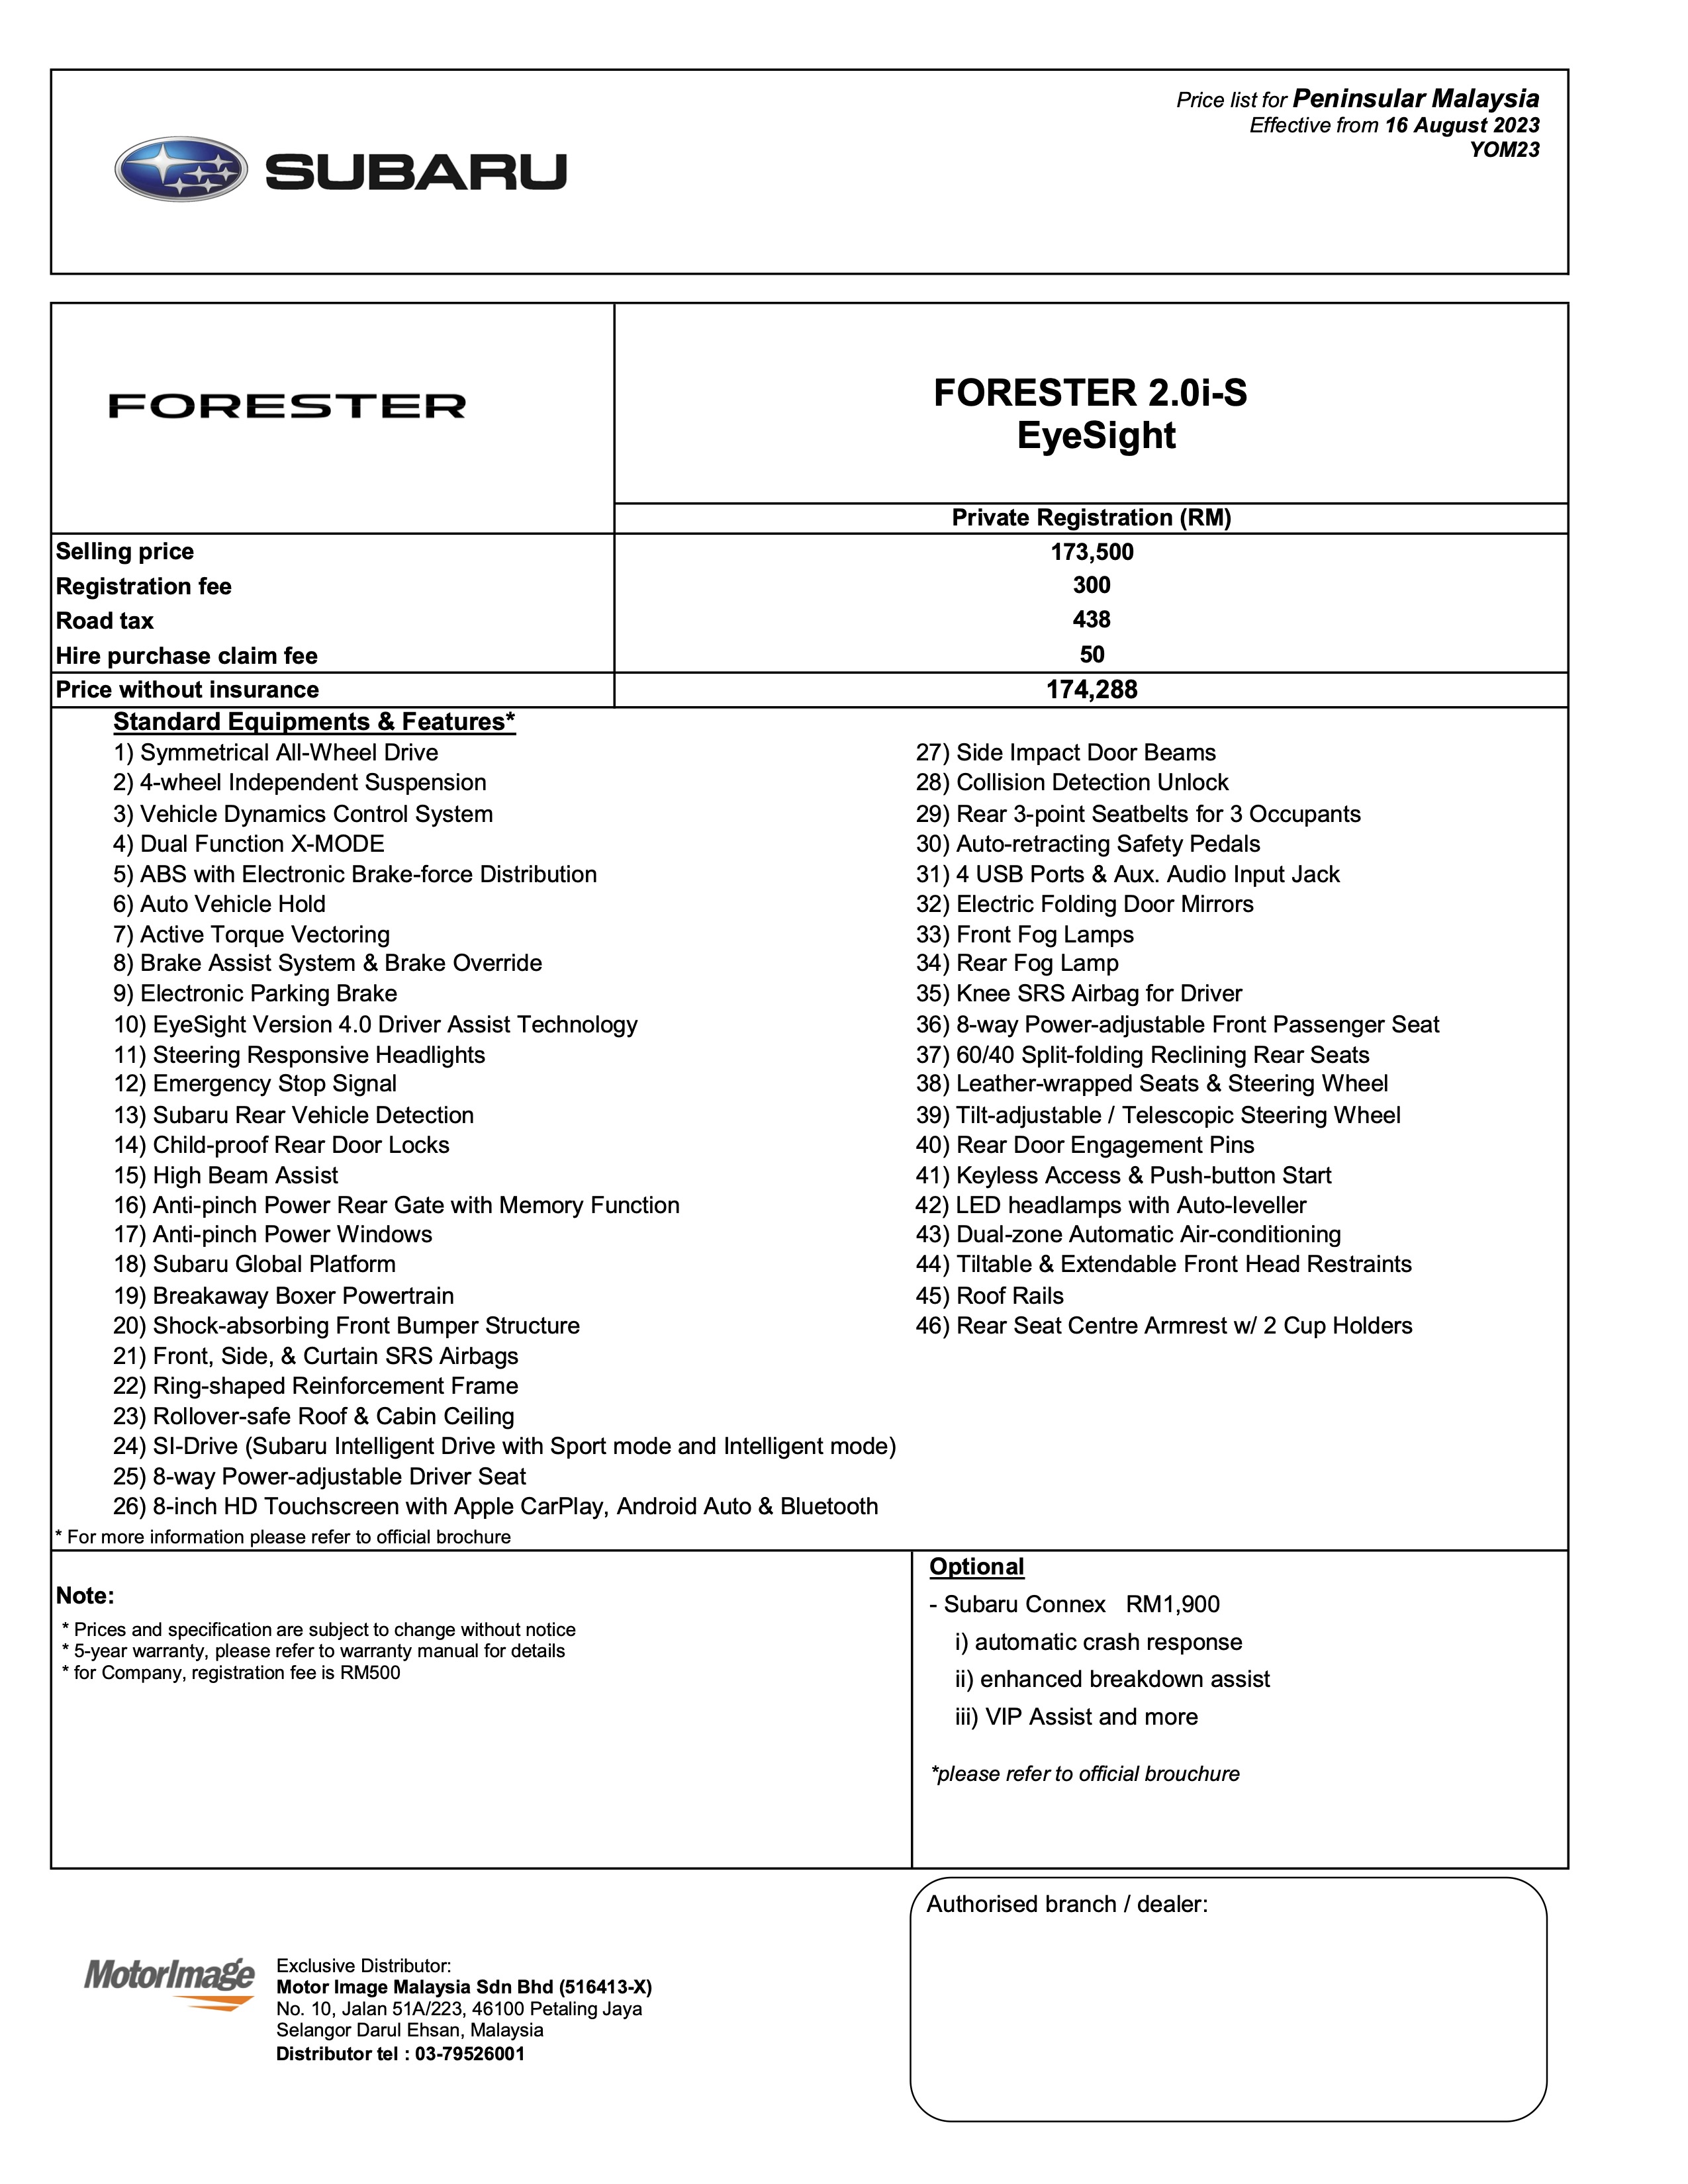 Pricesheet Forester 2.0i-S EyeSight - PM (16 Aug'23)